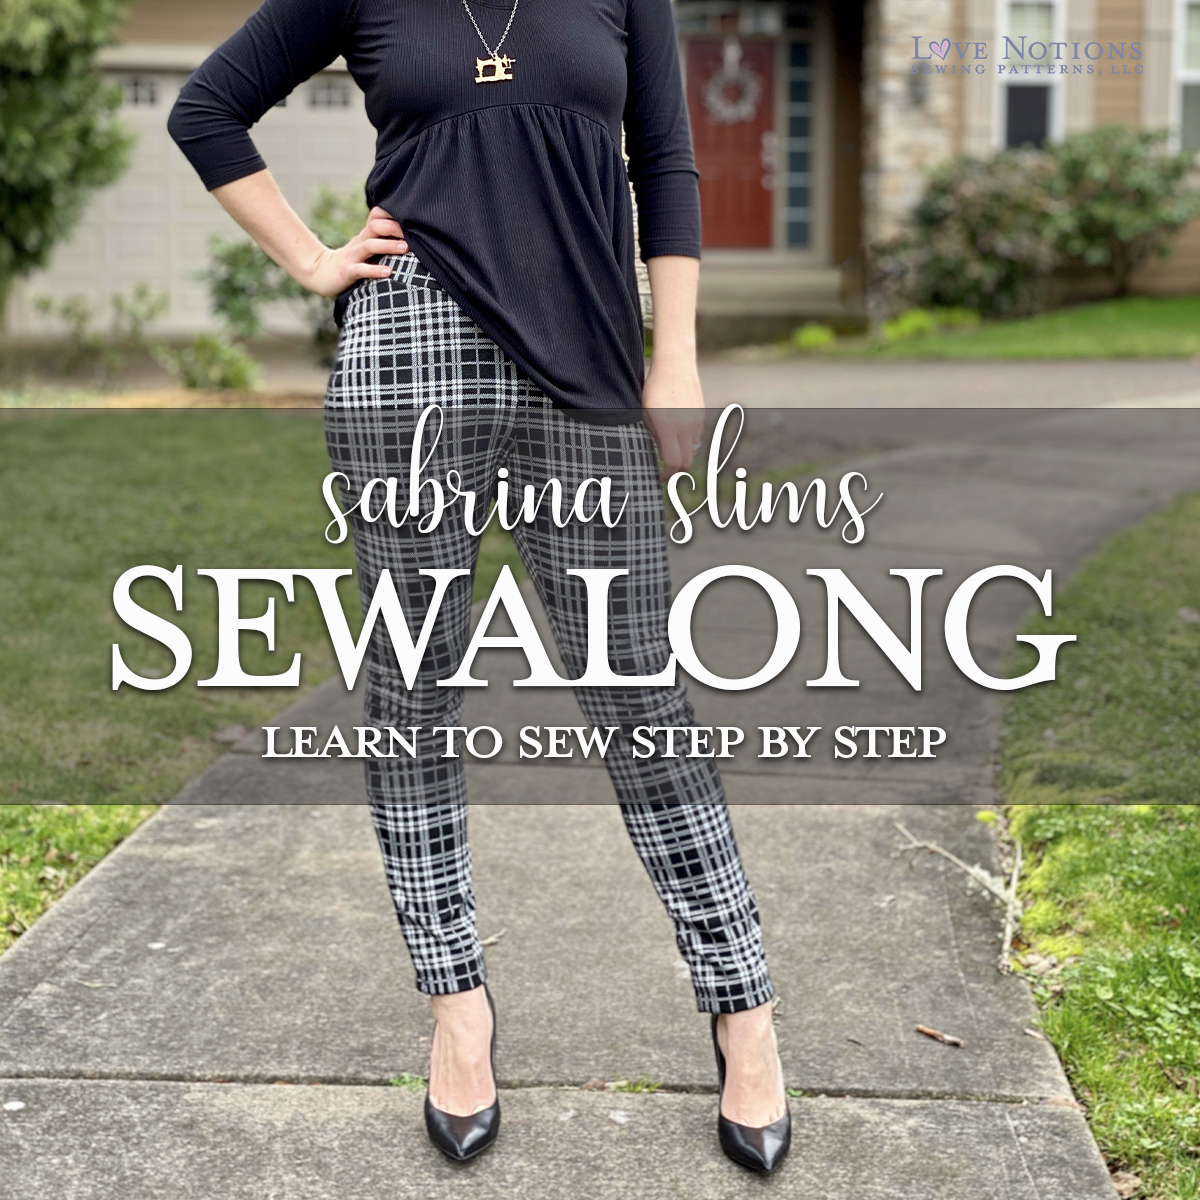 Sabrina Sewalong Day 1: Let’s talk about fabric